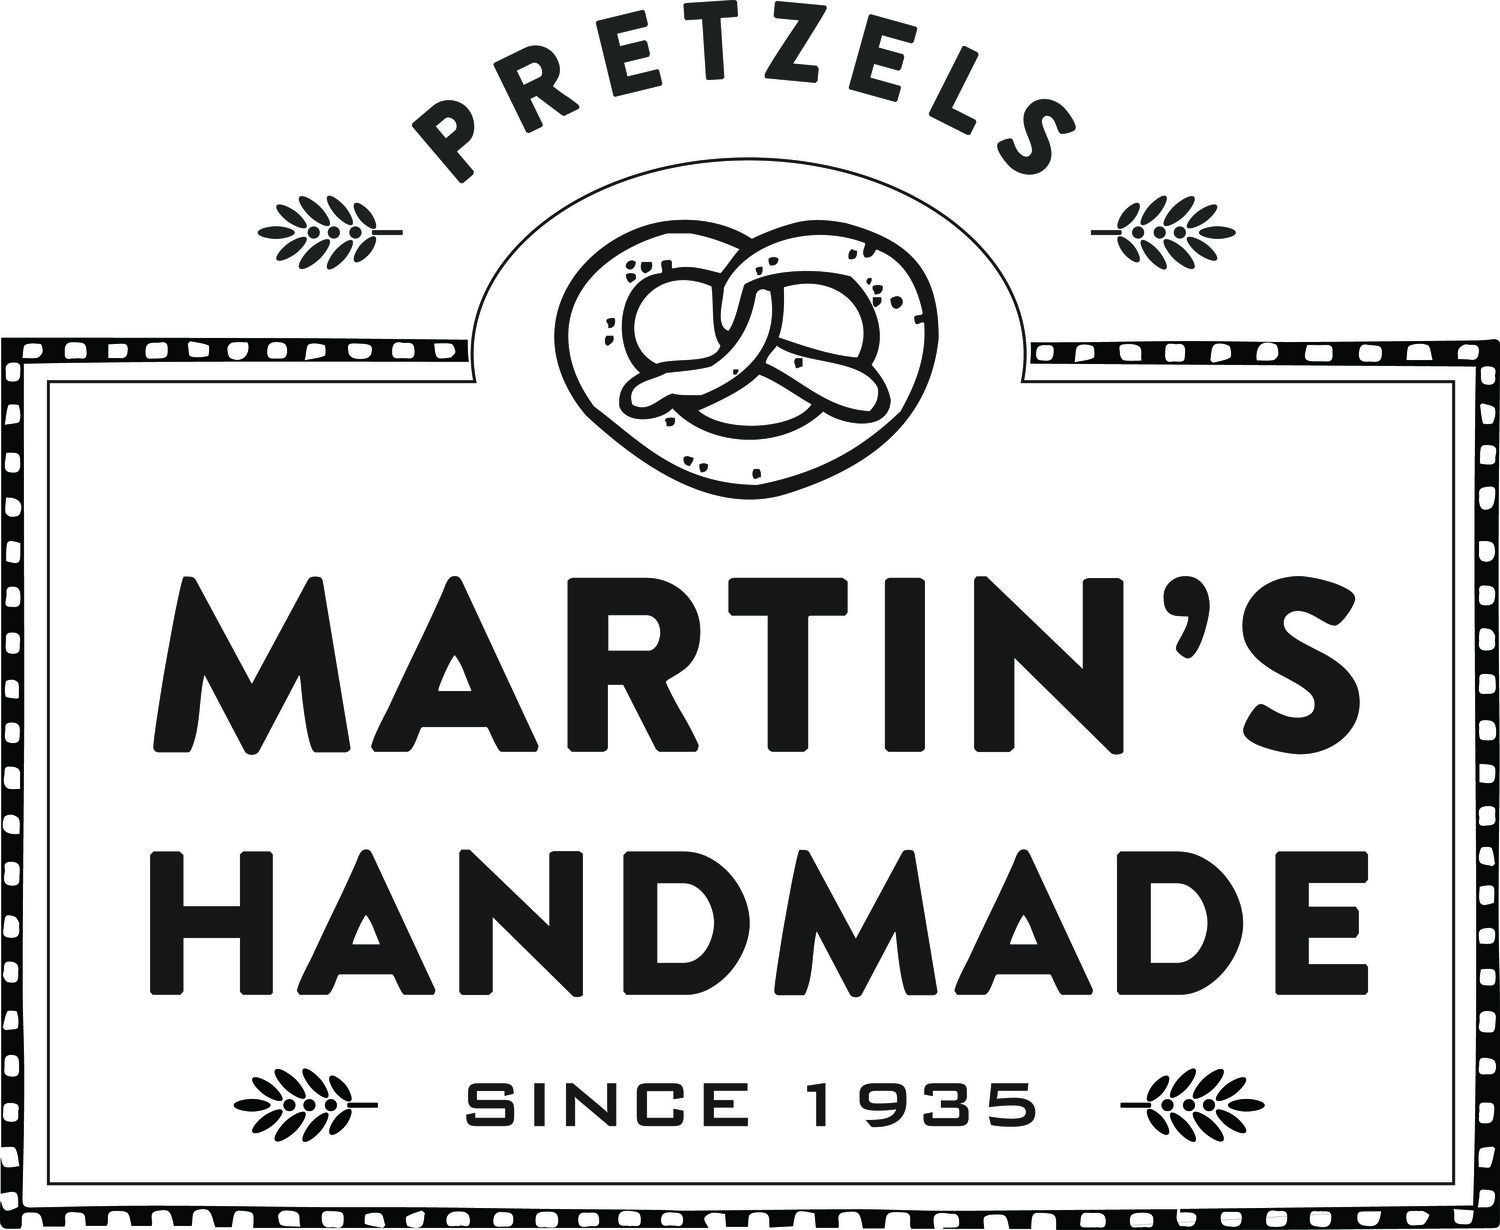 Martin's Handmade Pretzel's